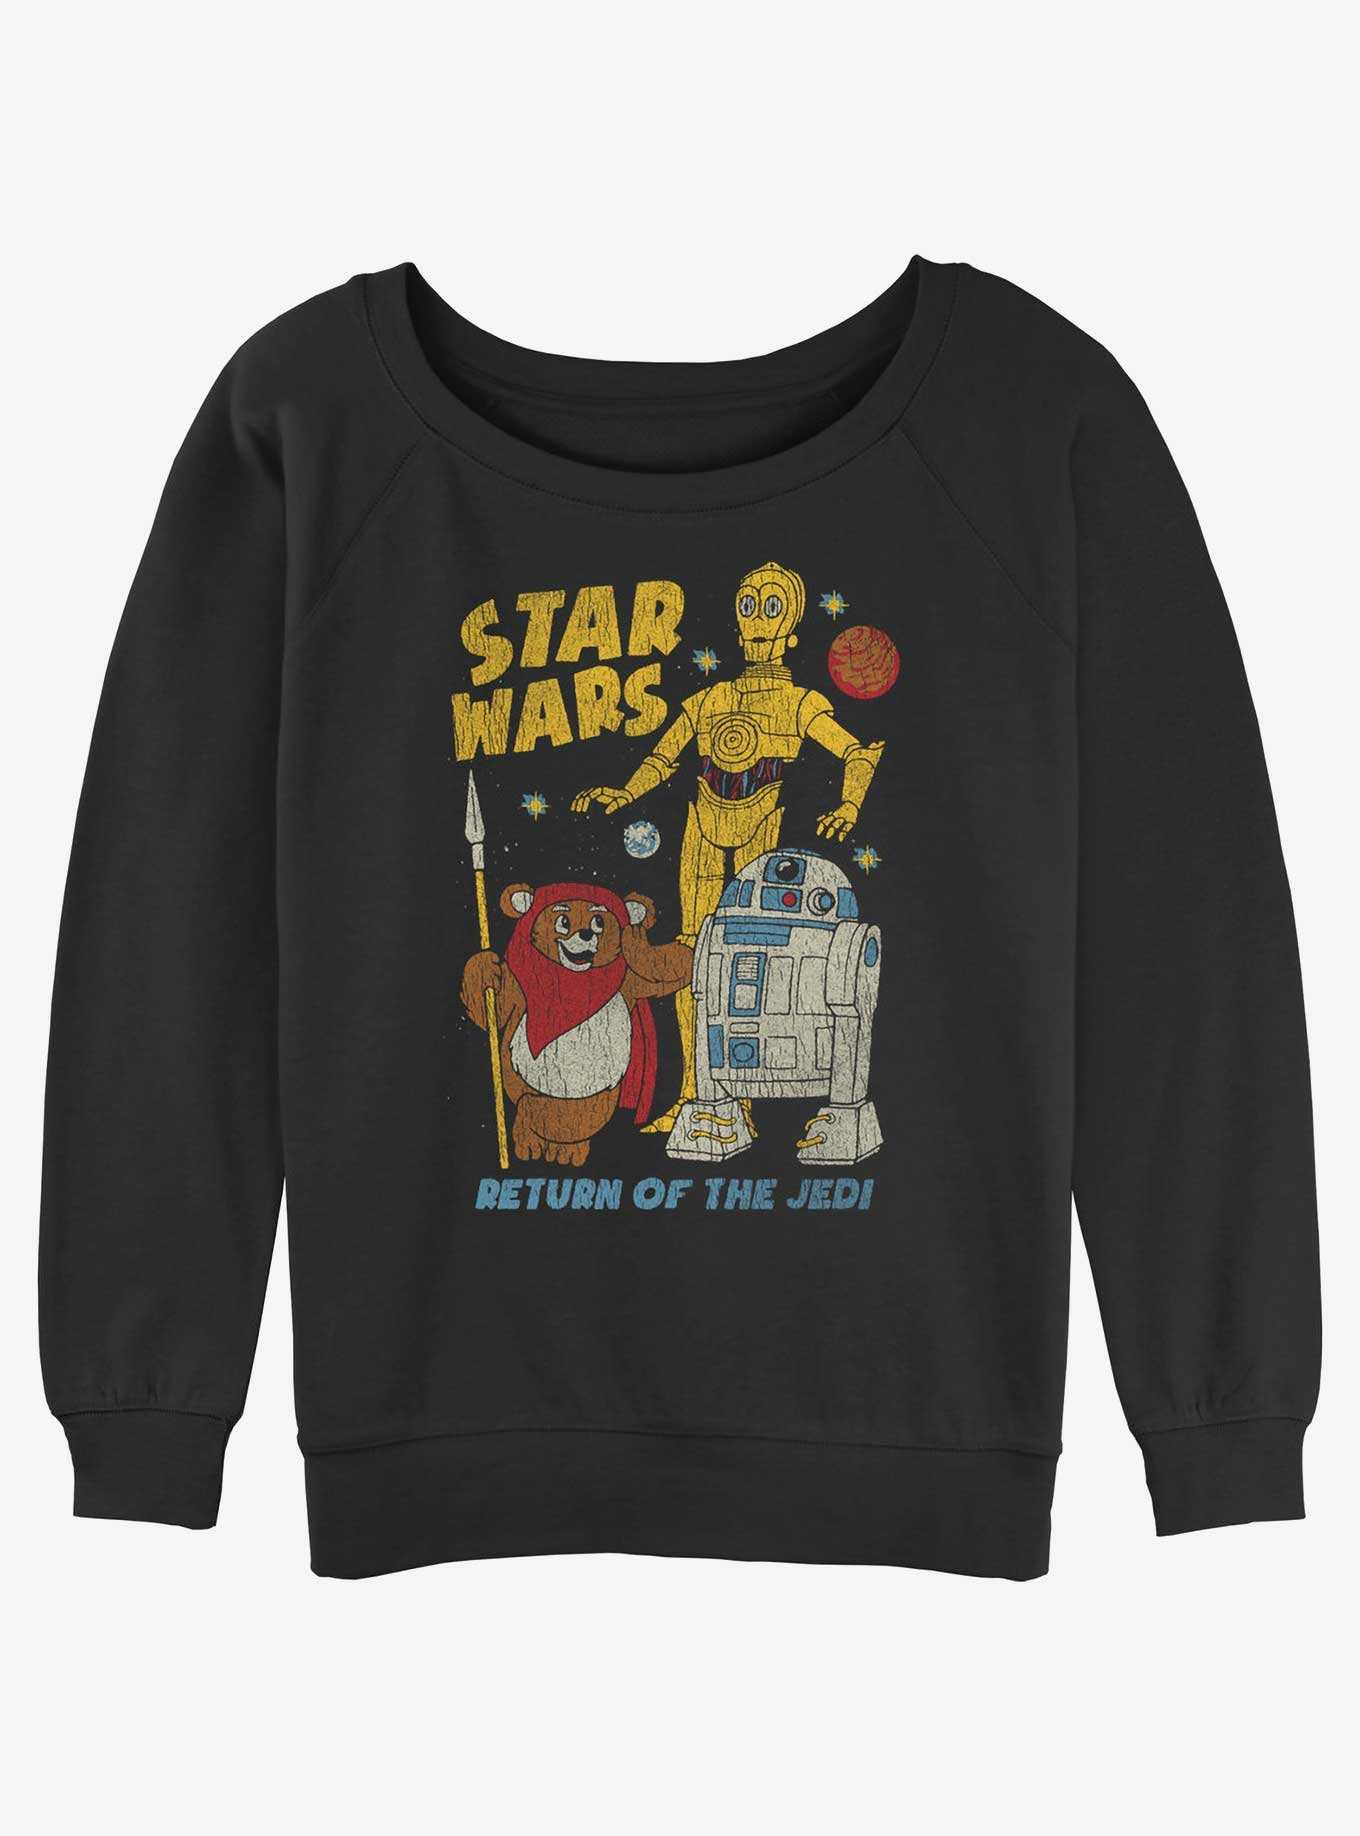 Star Wars Walk The Ewok Girls Slouchy Sweatshirt, , hi-res